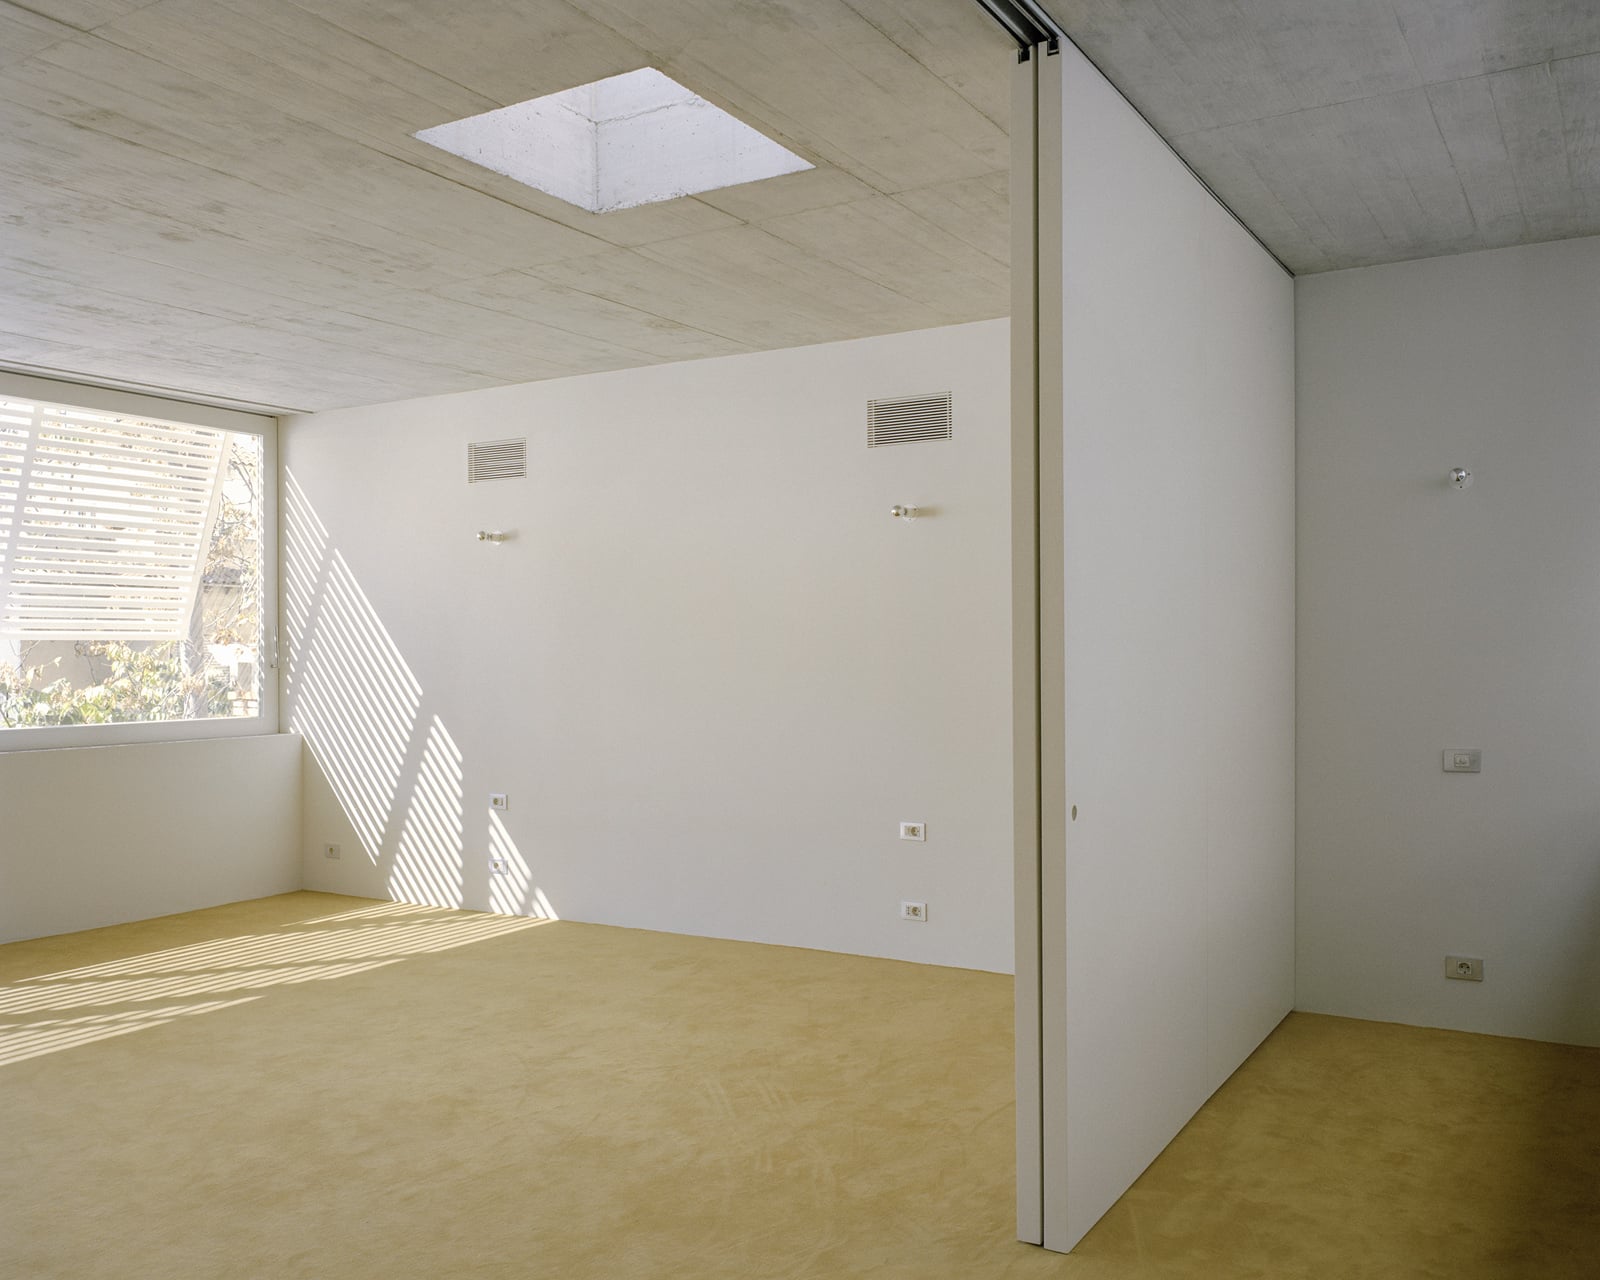 Image of 20220211 ArquitecturaG VerdiHouse 06 1 in Verdi House - Cosentino